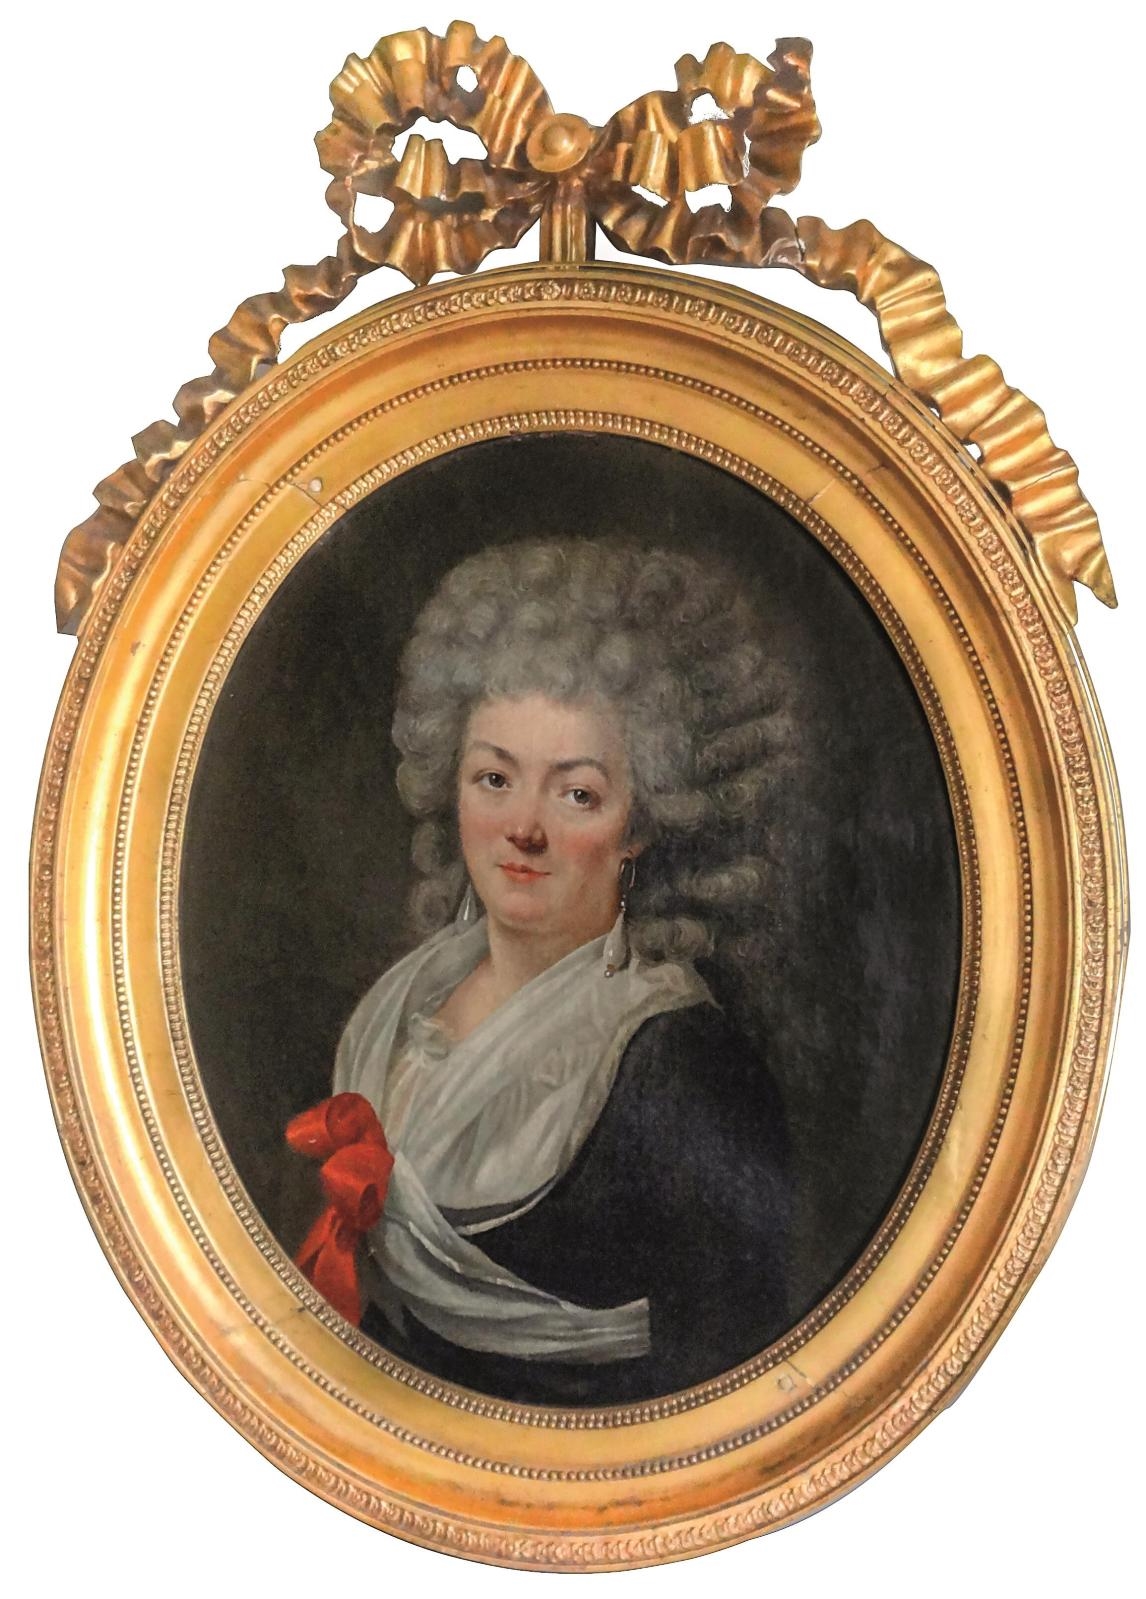 Presumed portrait of Miss Rose Bertin by French School, 18th Century, Antoine Vestier